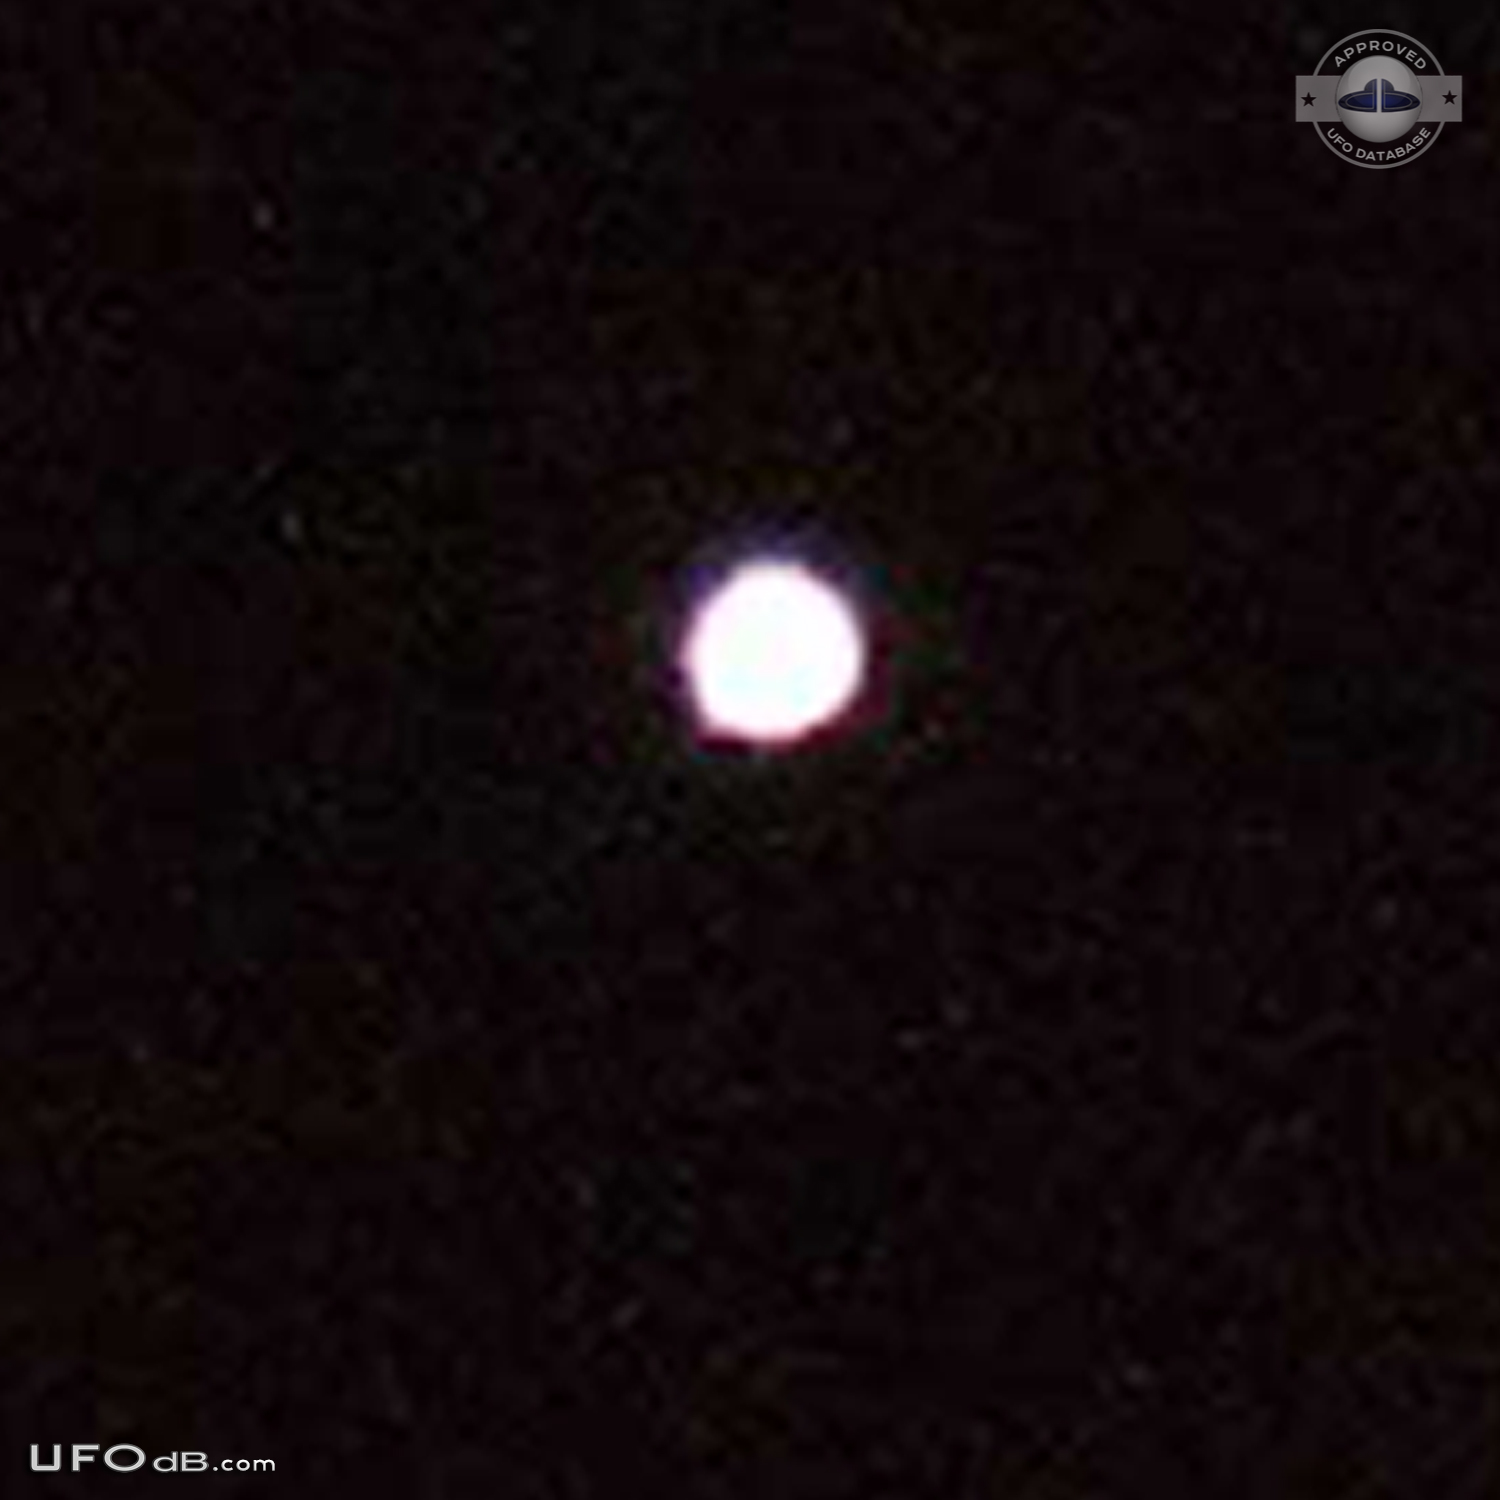 Clear White Orb UFO picture - Ellon Aberdeenshire Scotland UK - 2012 UFO Picture #416-4